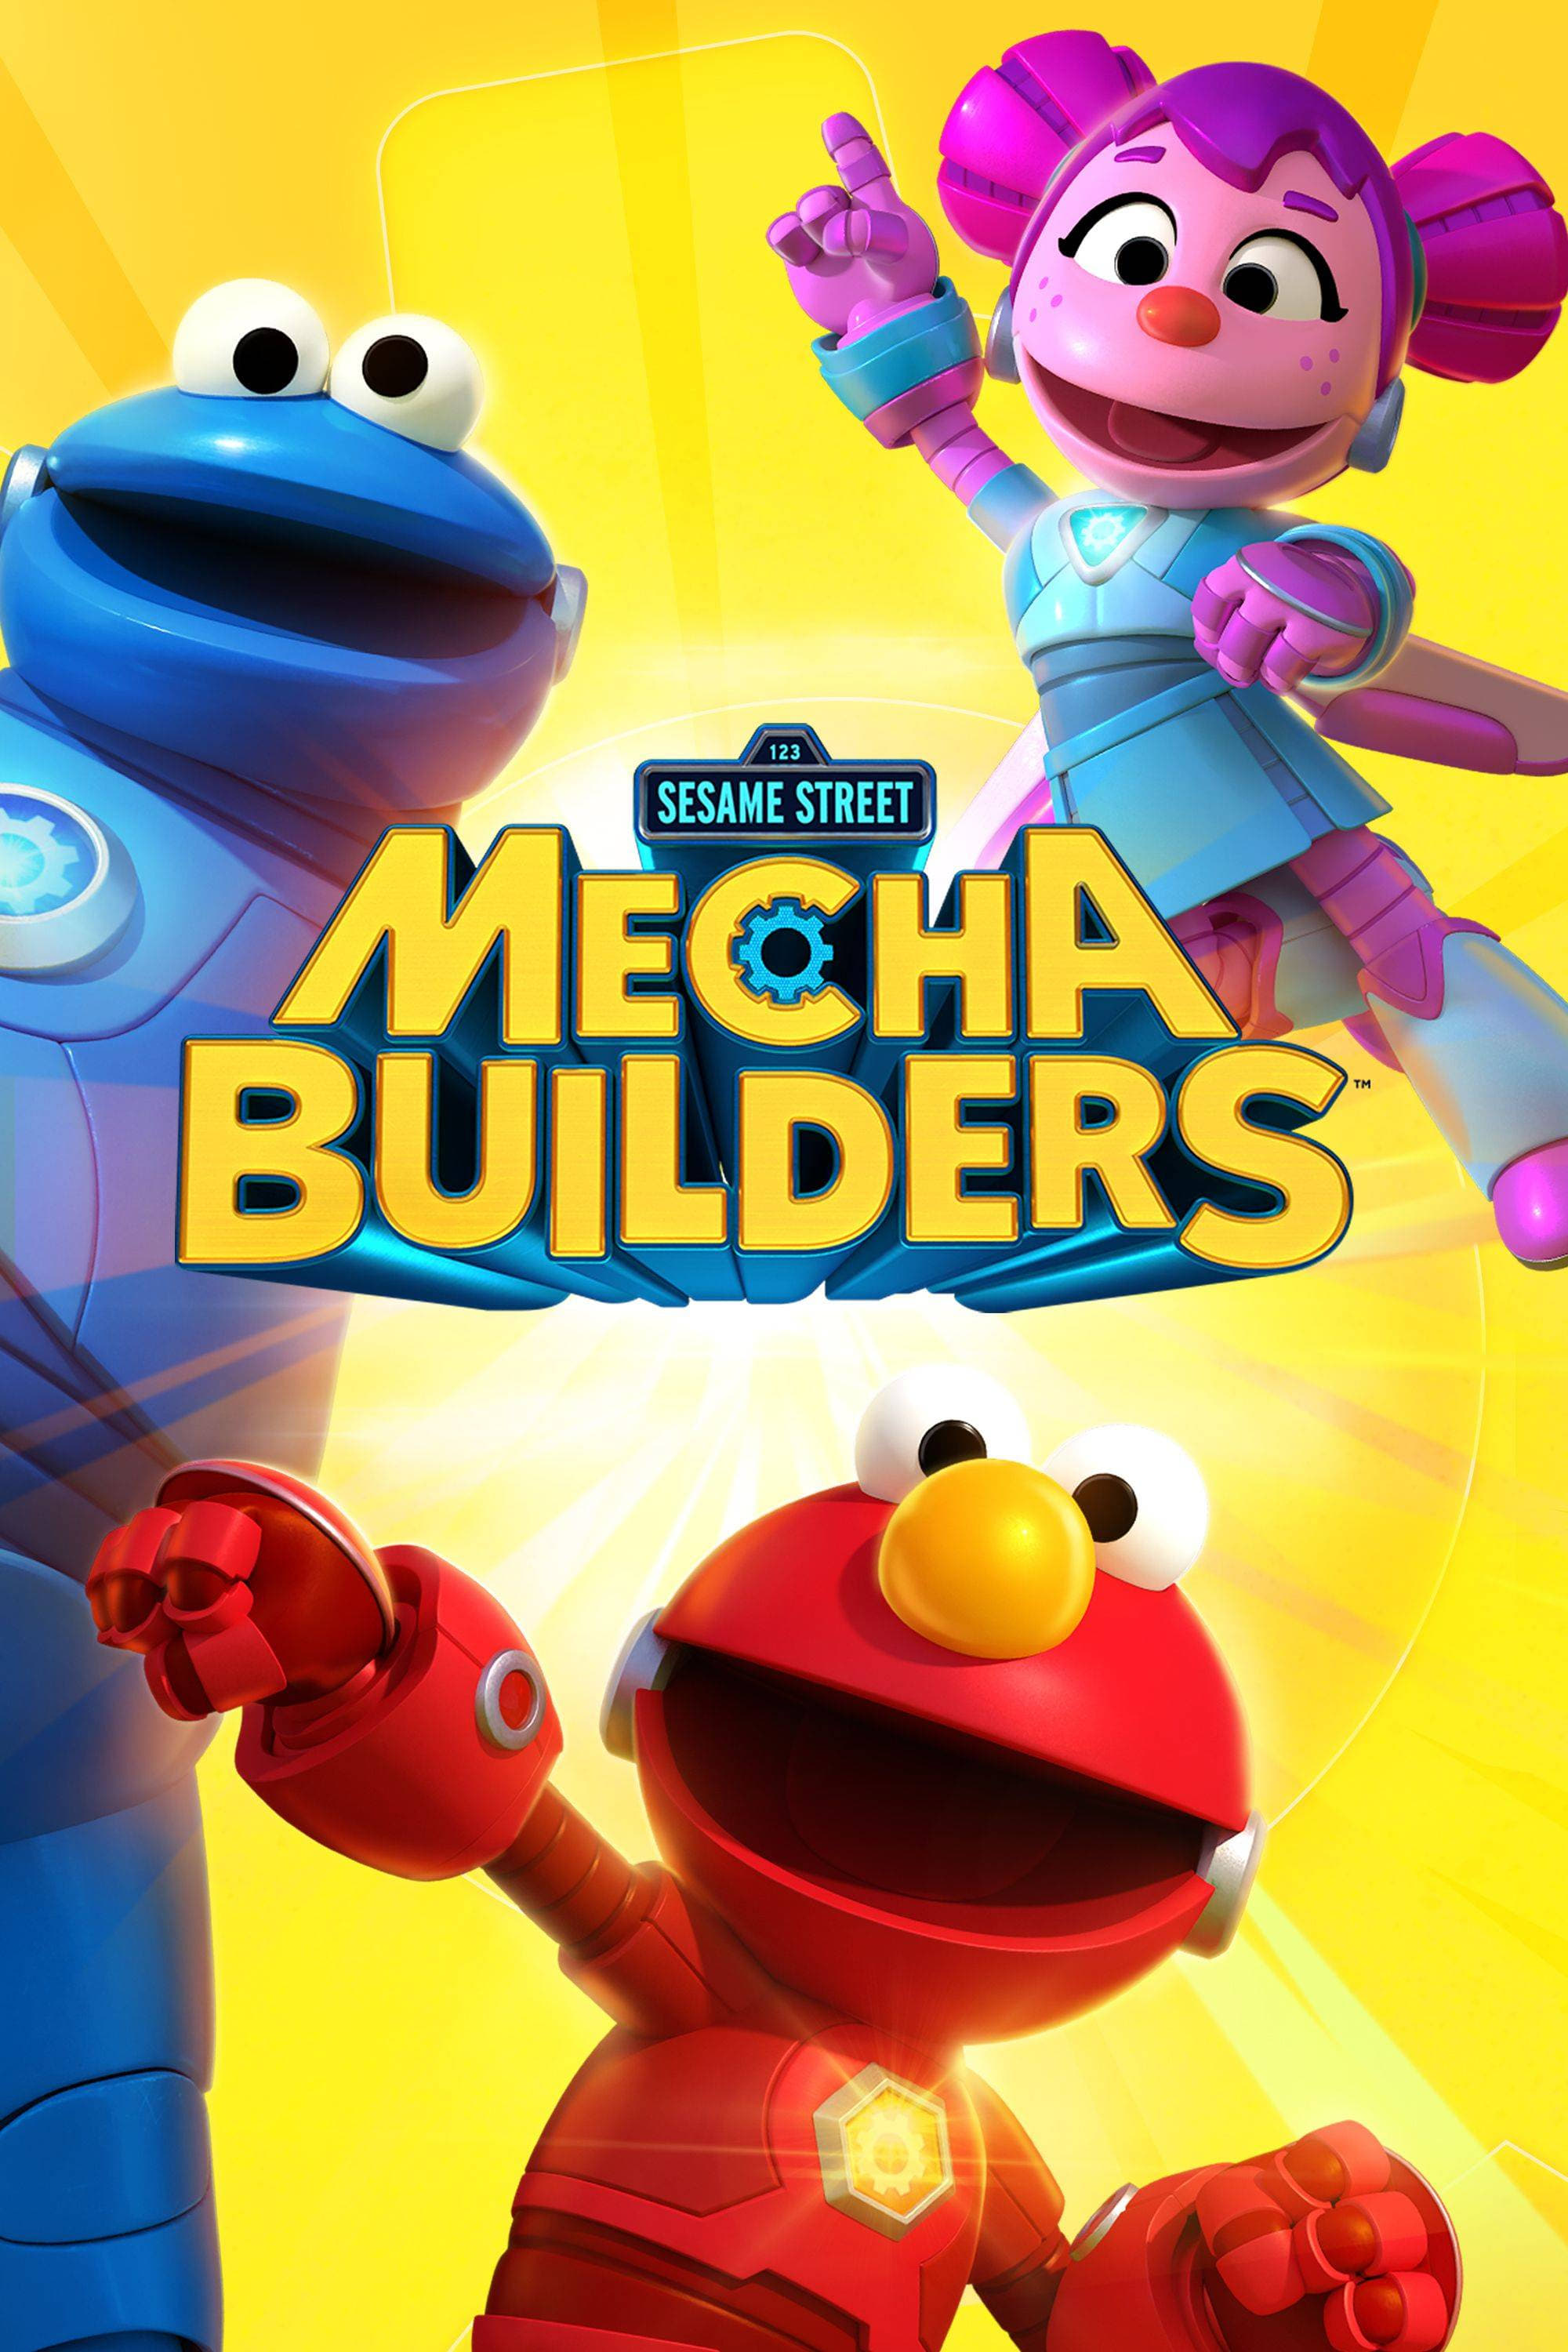 Mecha Builders TV Shows About Superhero